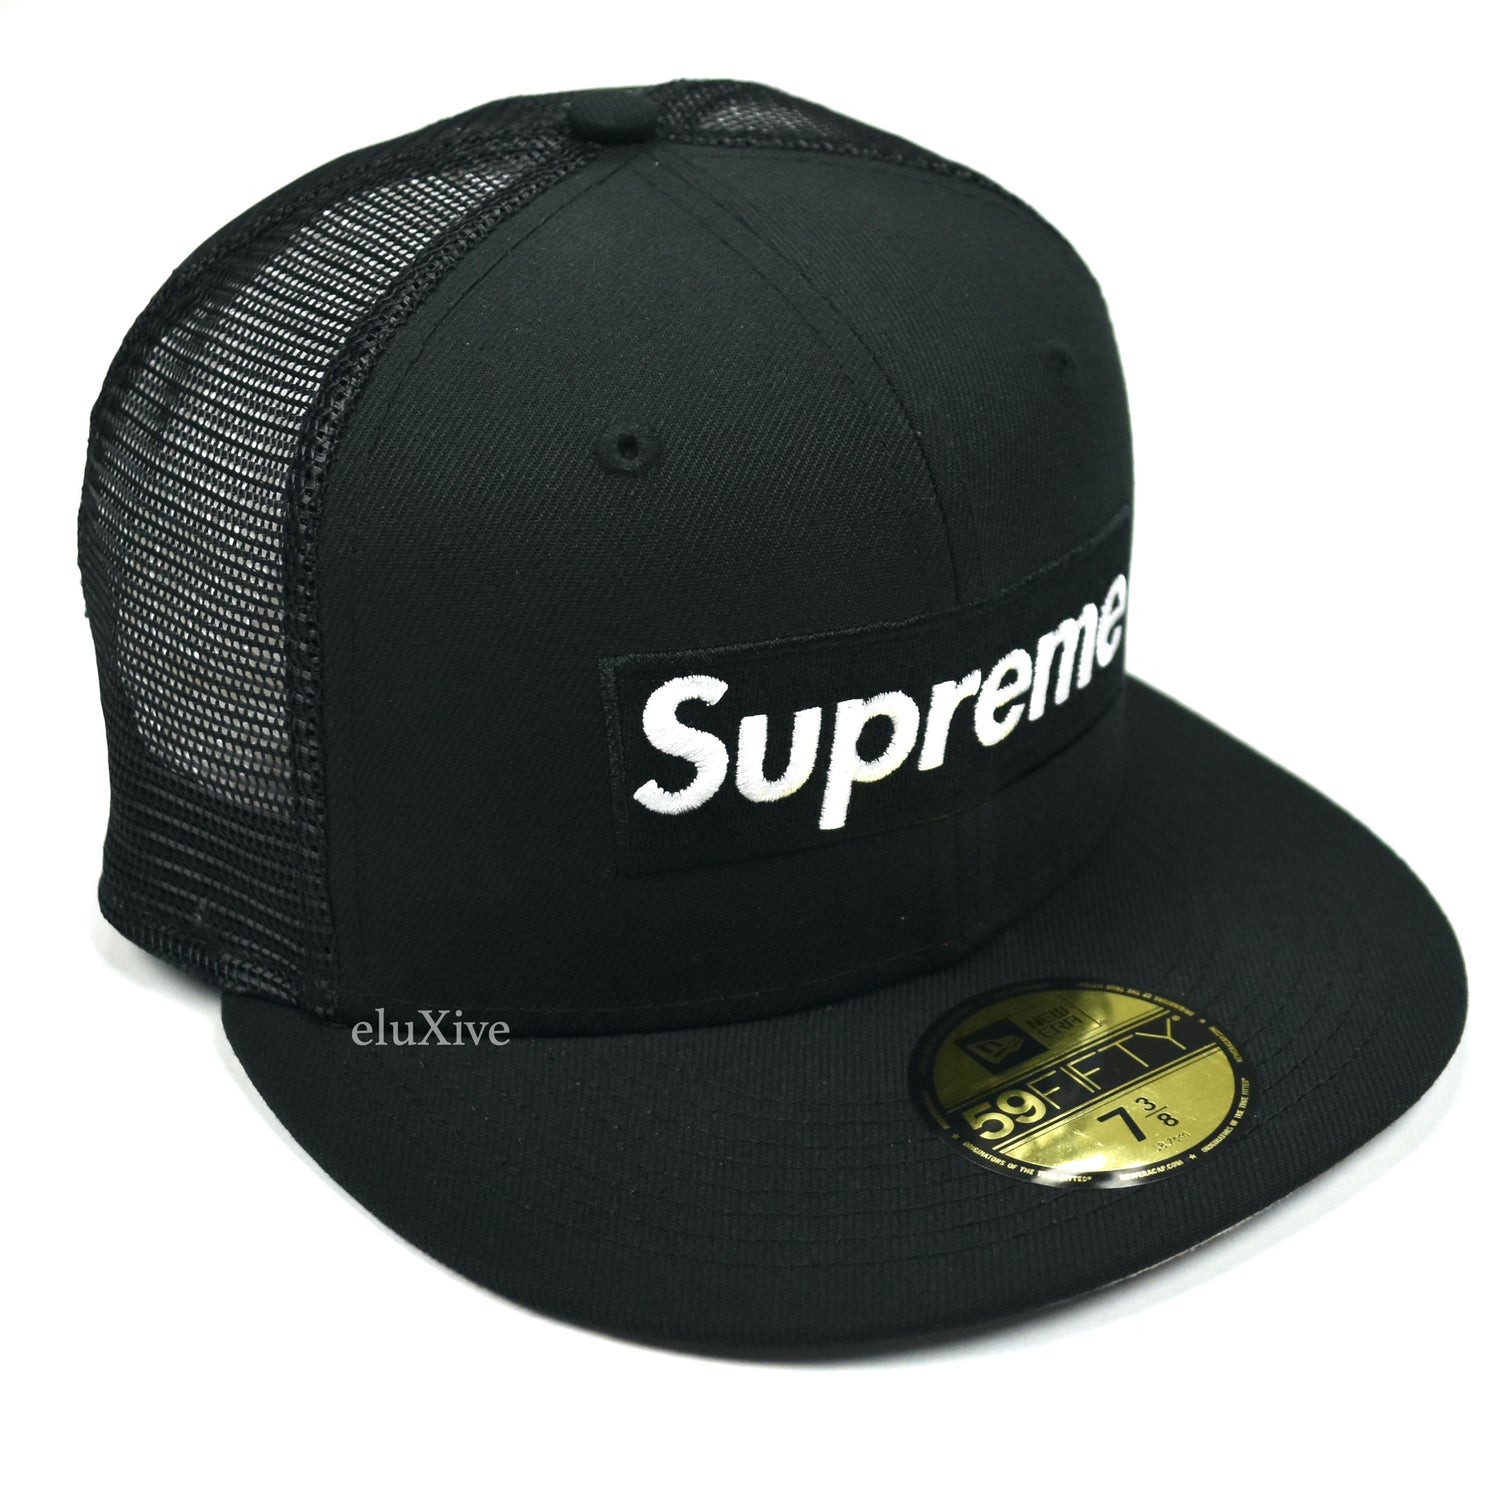 Supreme New Era SS18 Black Mesh Baseball Fitted Box Logo Hat